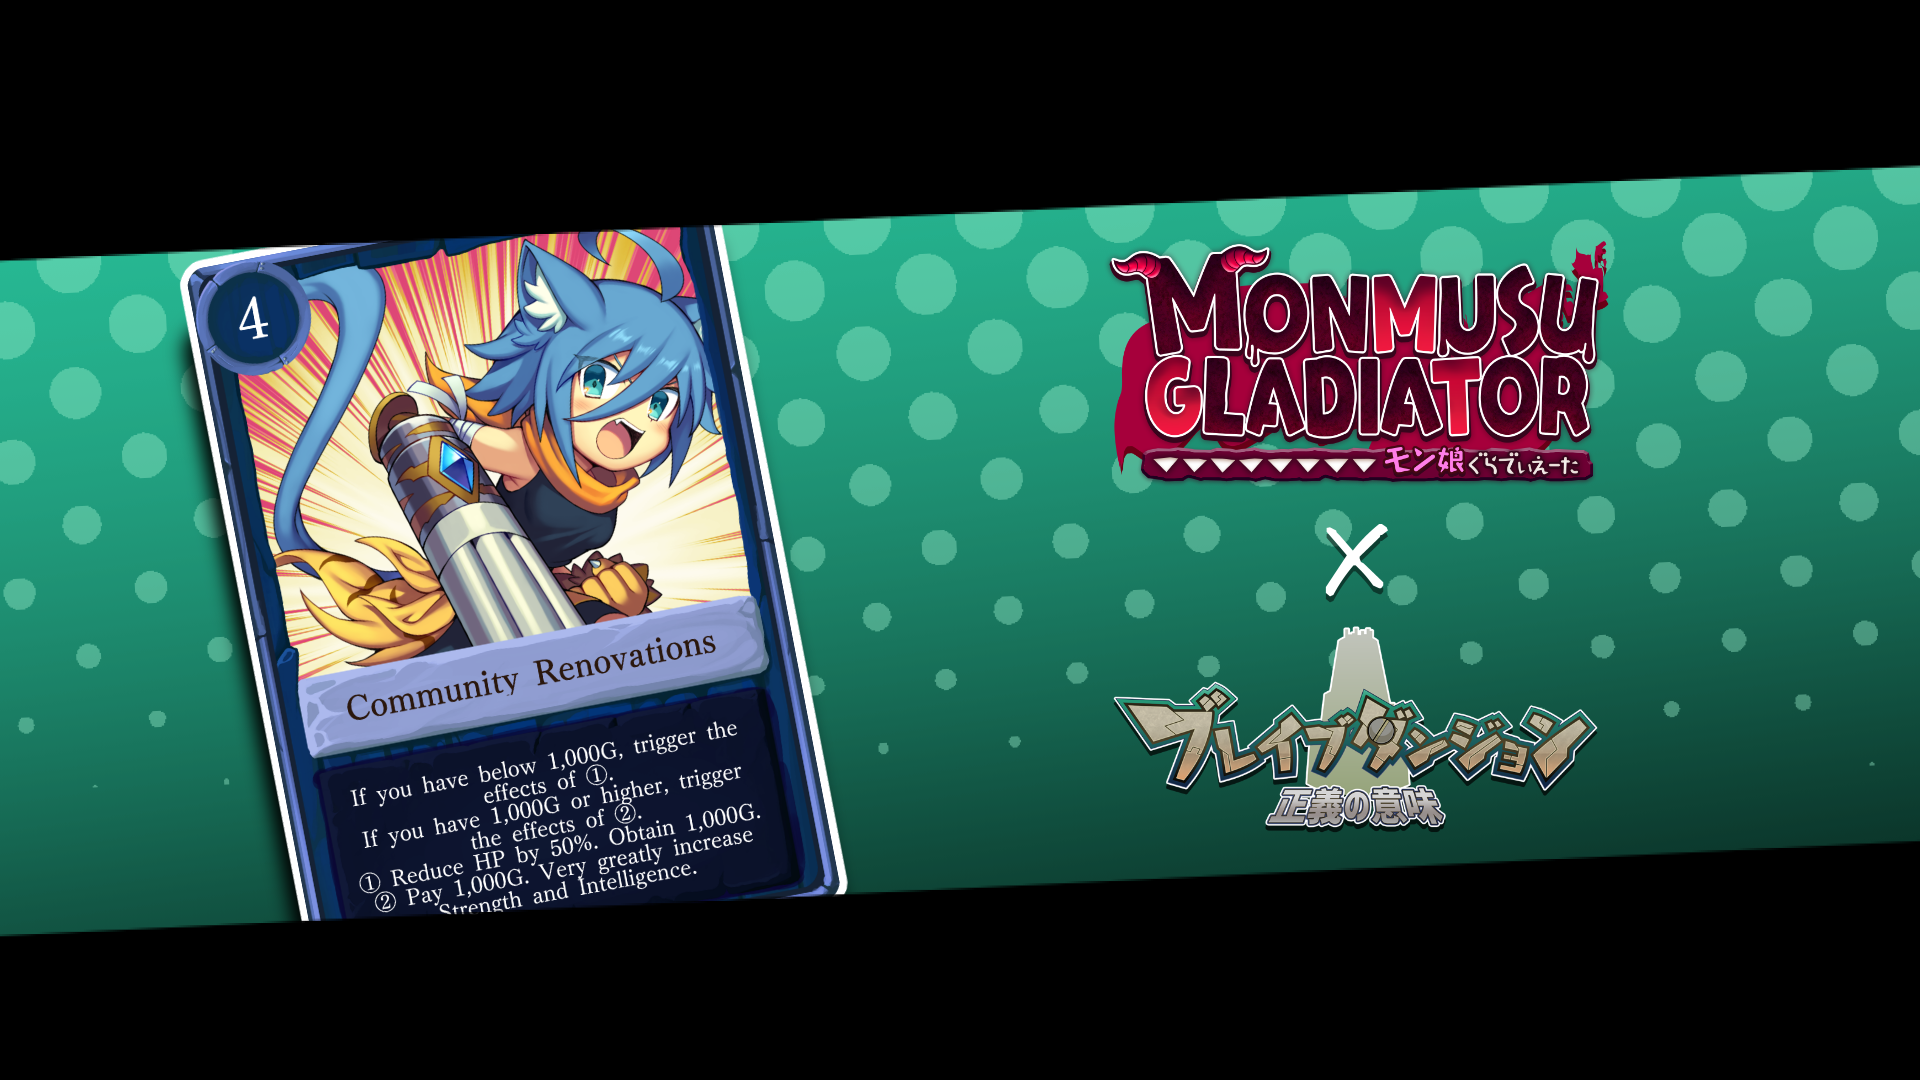 Monmusu Gladiator download the new